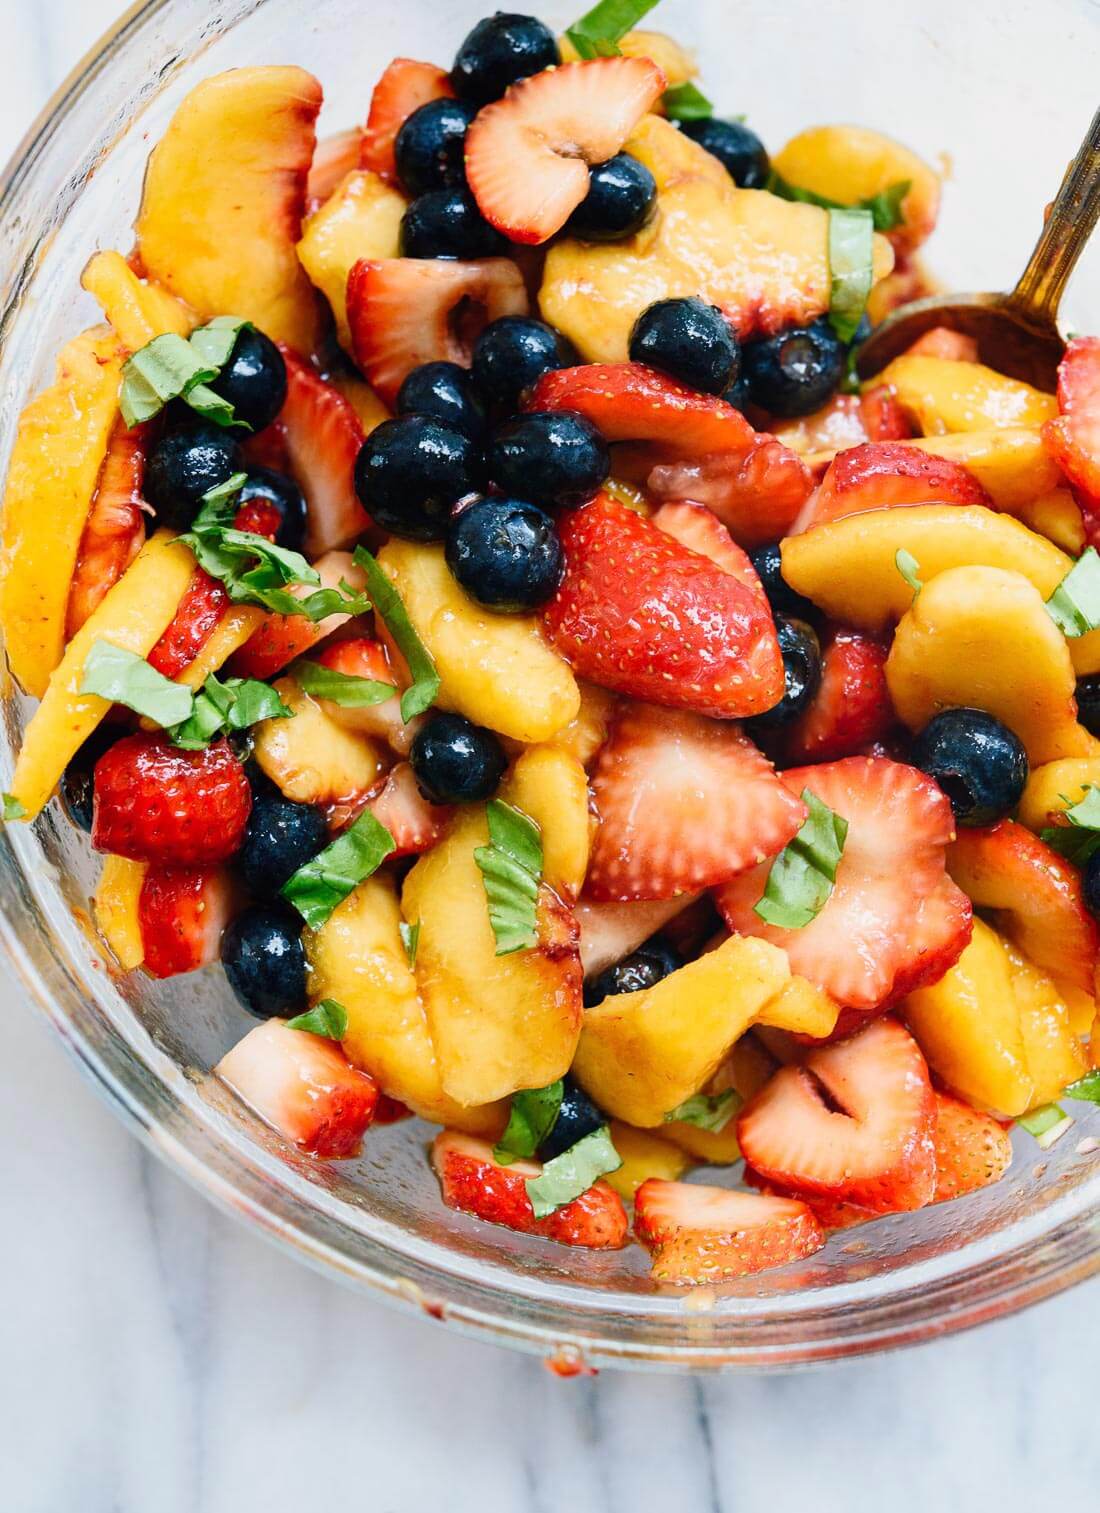 Take advantage of ripe summer fruit to make this simple summer fruit salad